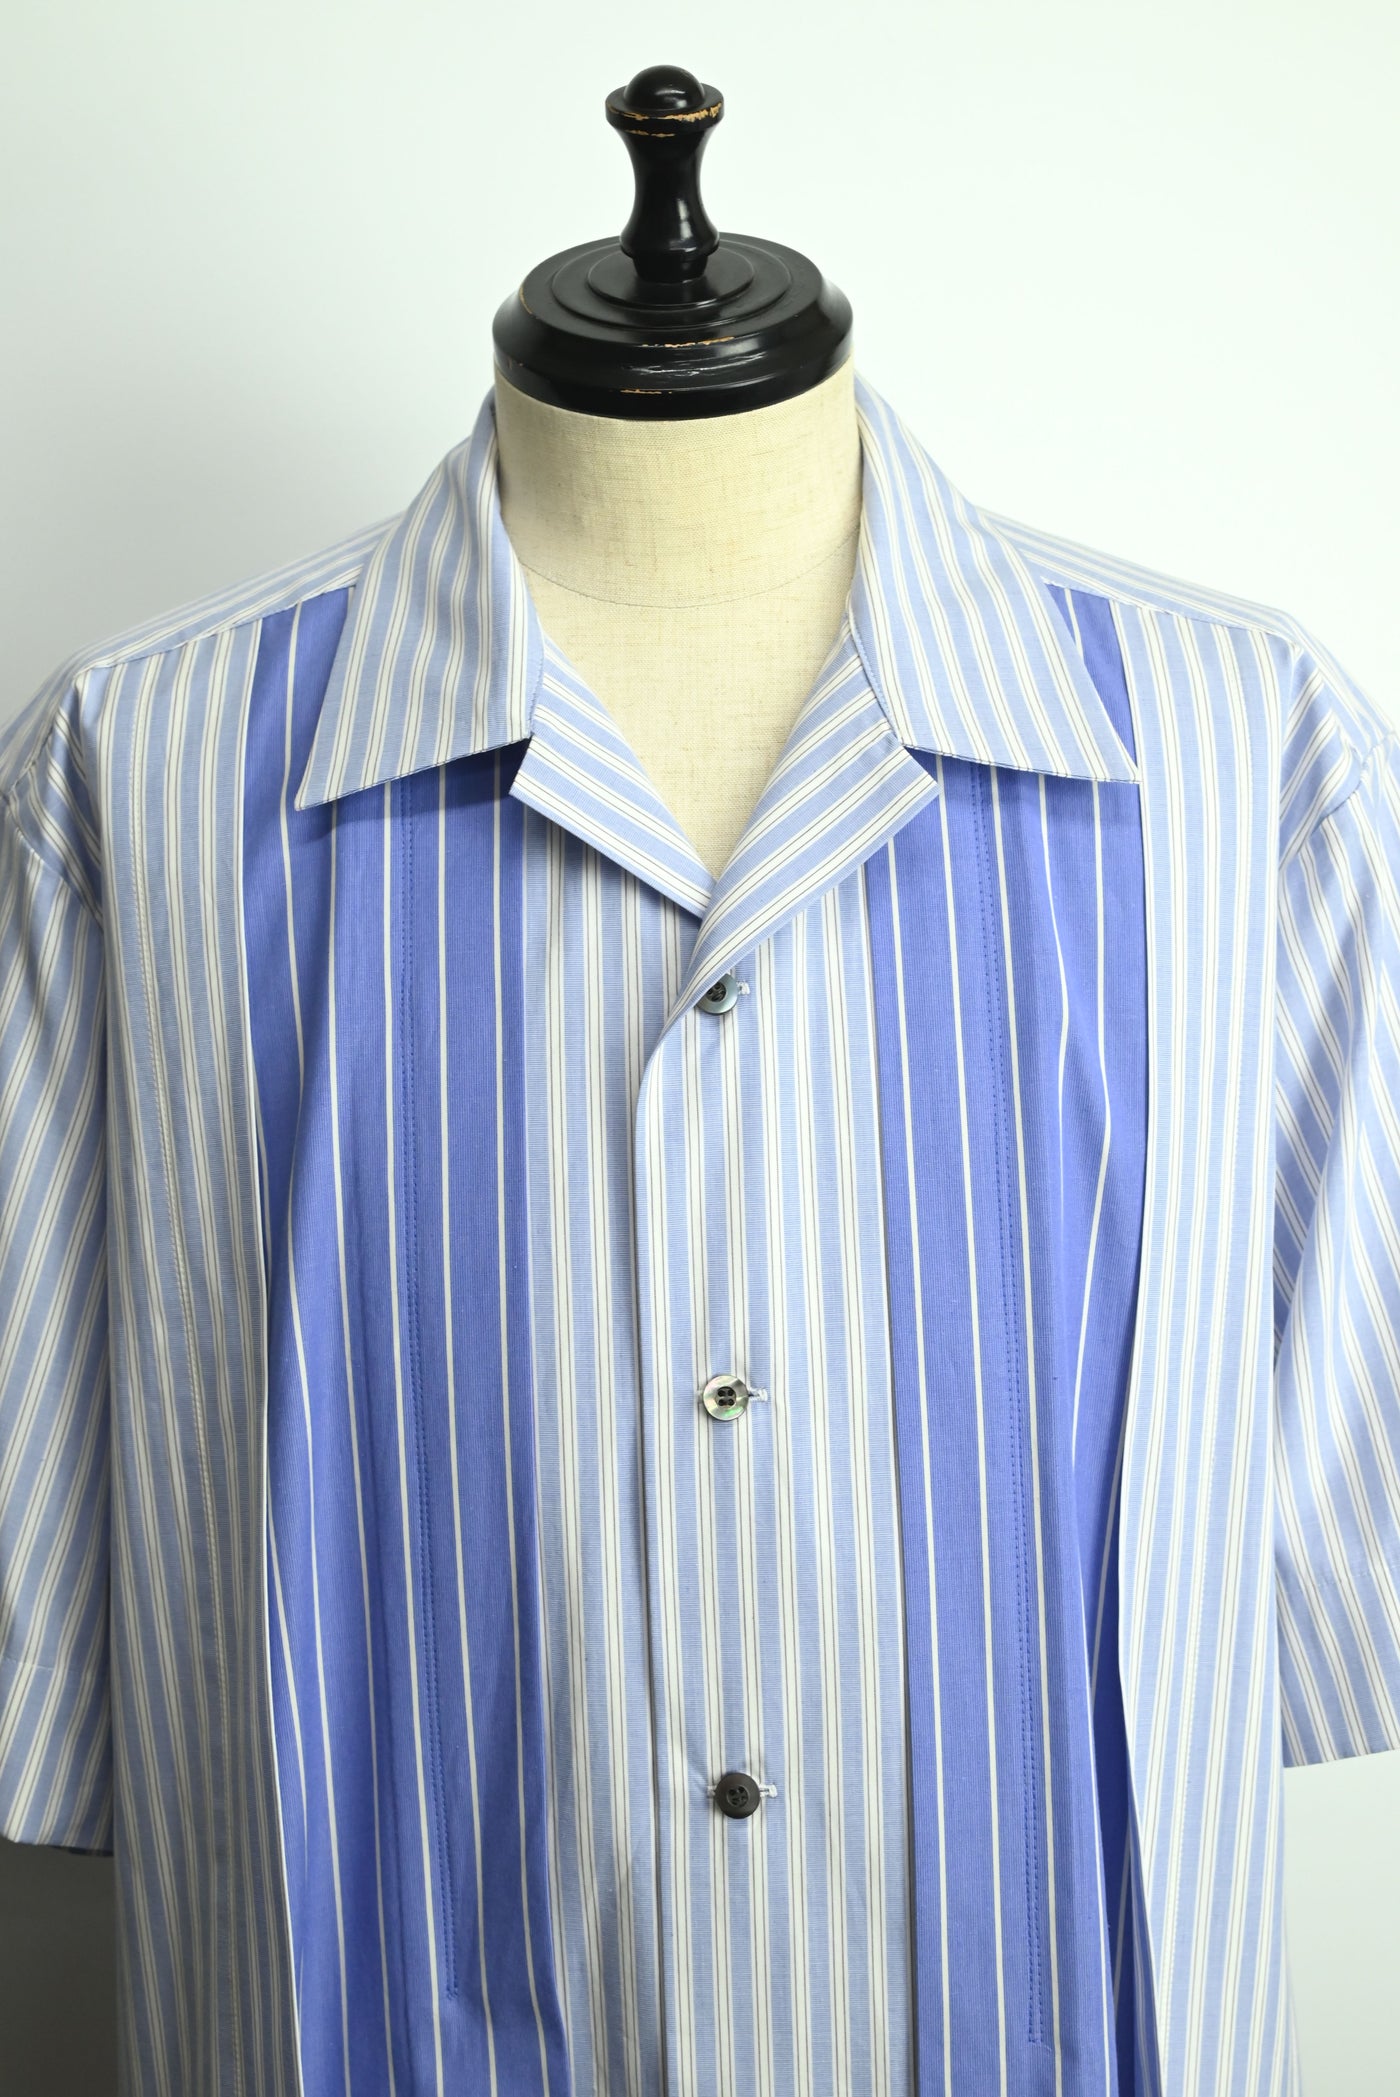 UJOH / Panel Slit Open Collar Half Sleeve Shirt